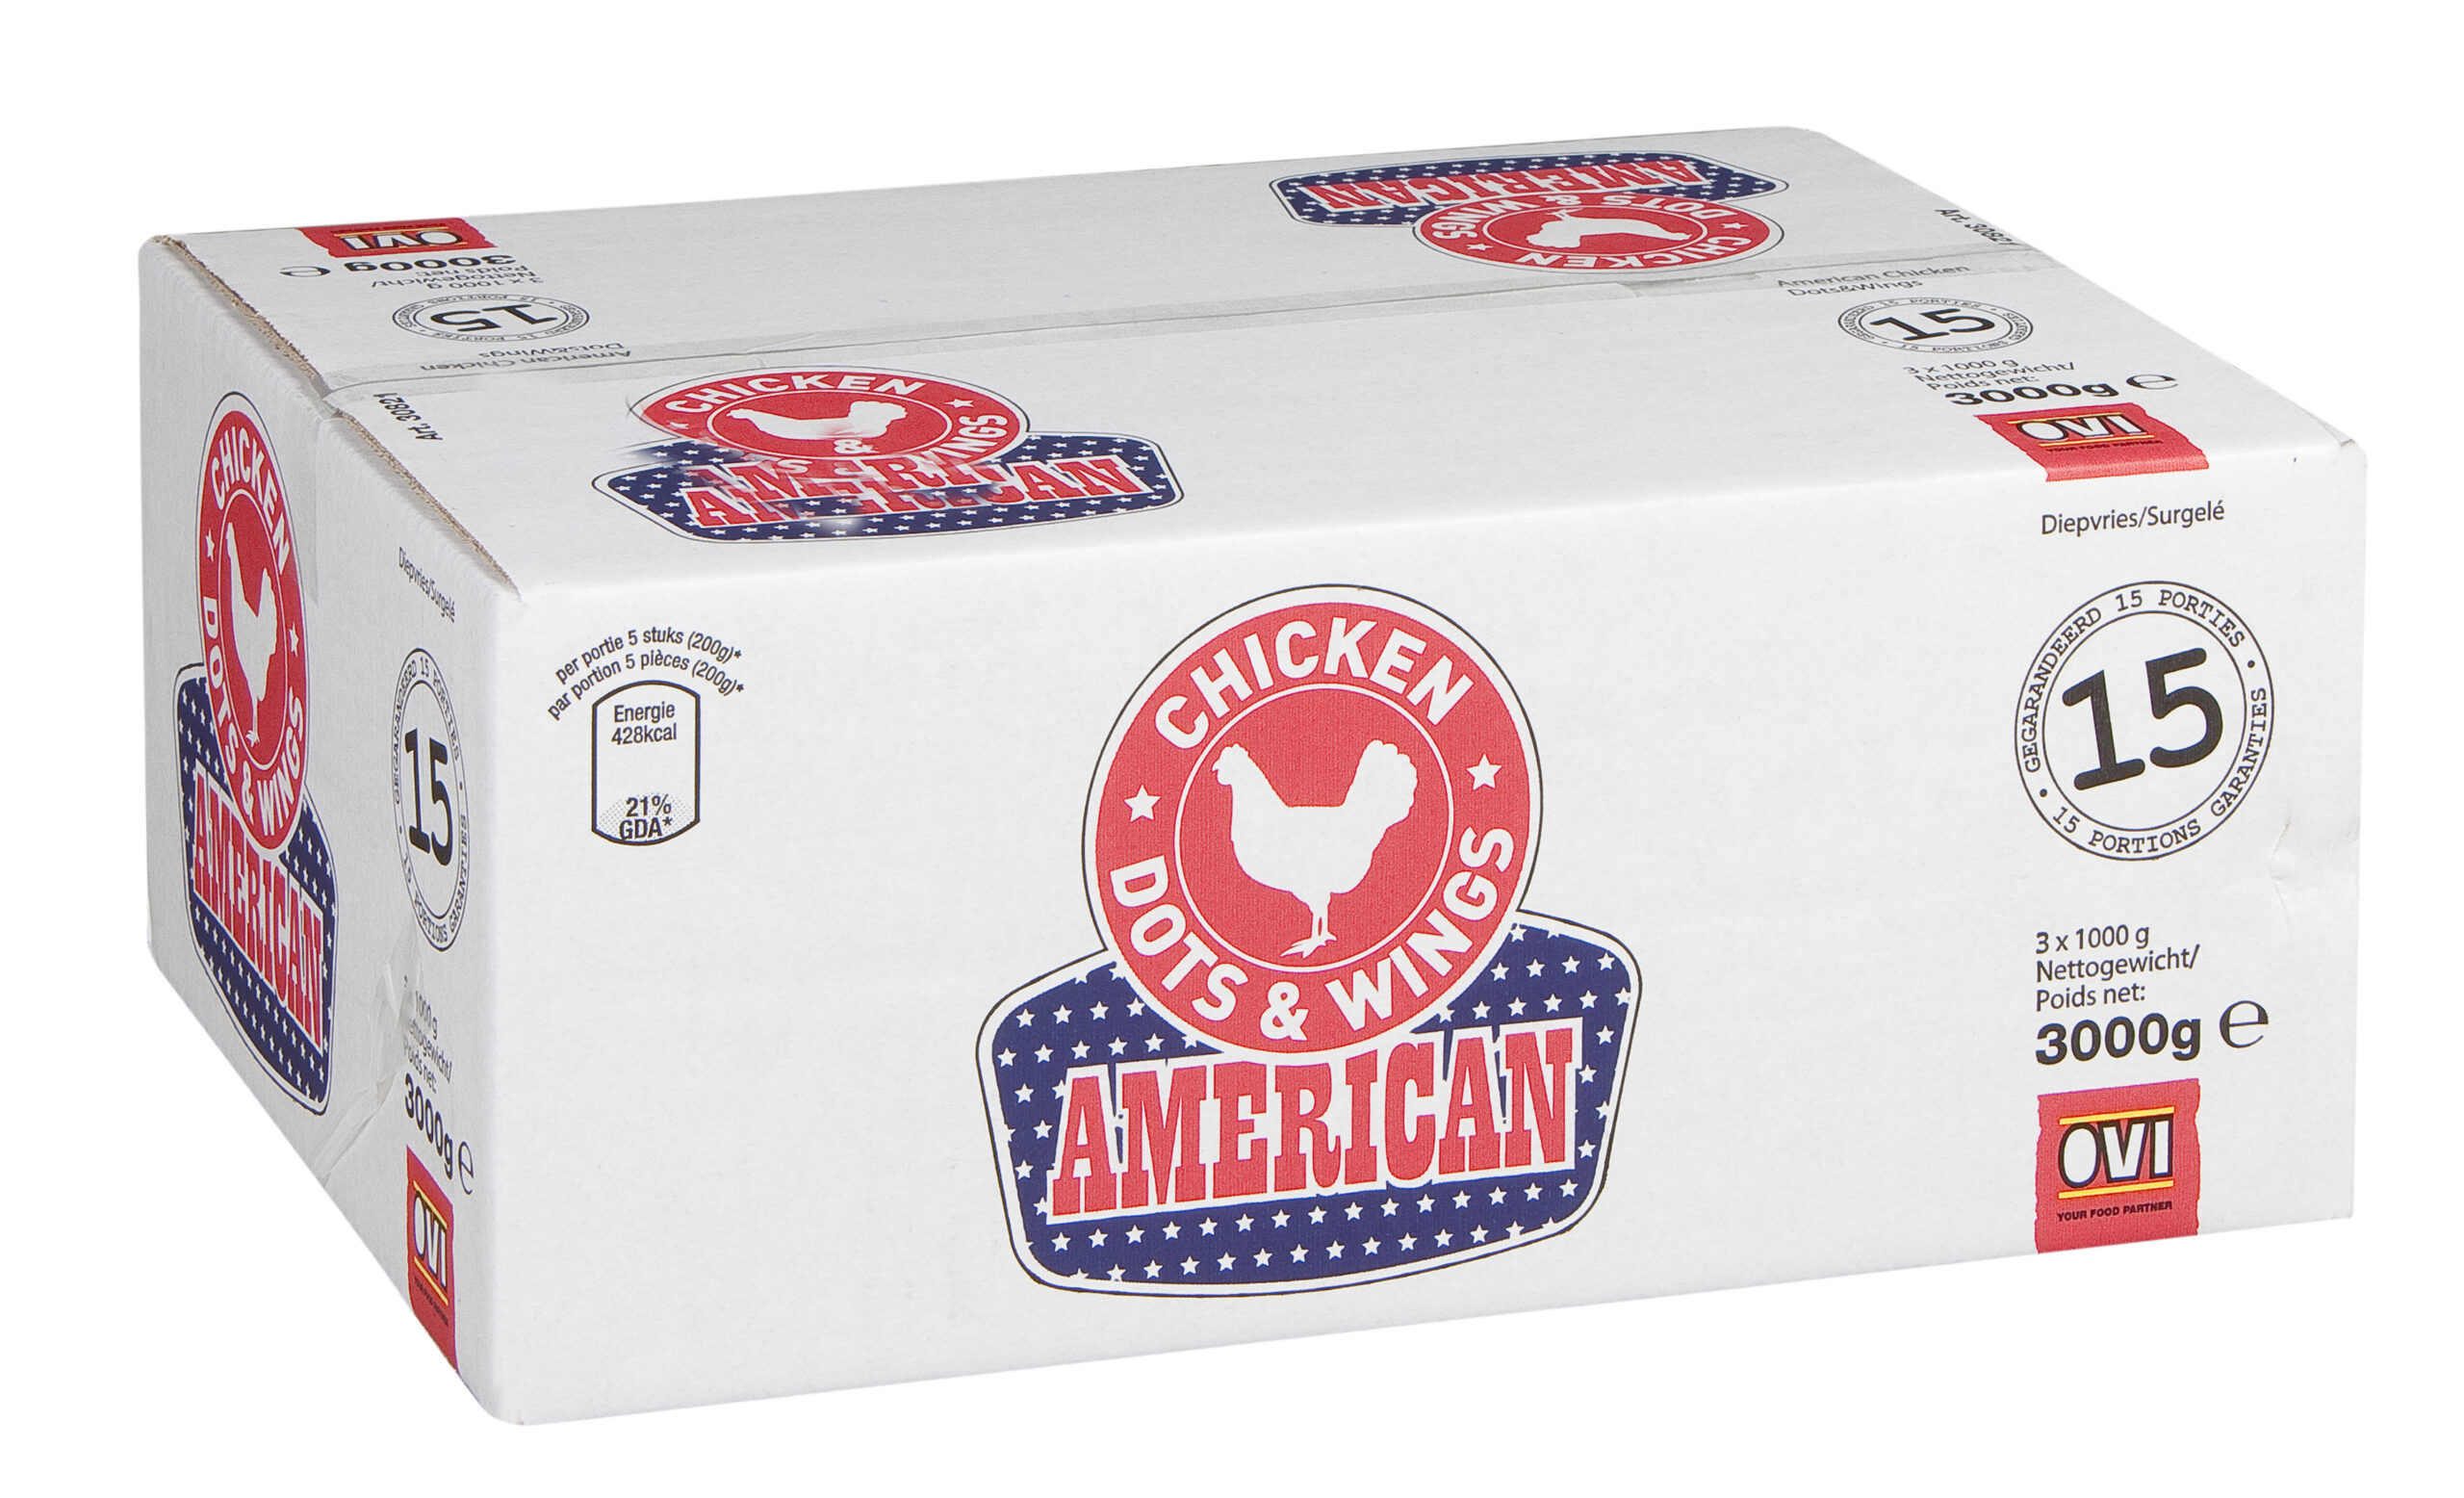 30821 Packshot Chicken Dots & Wings American Style